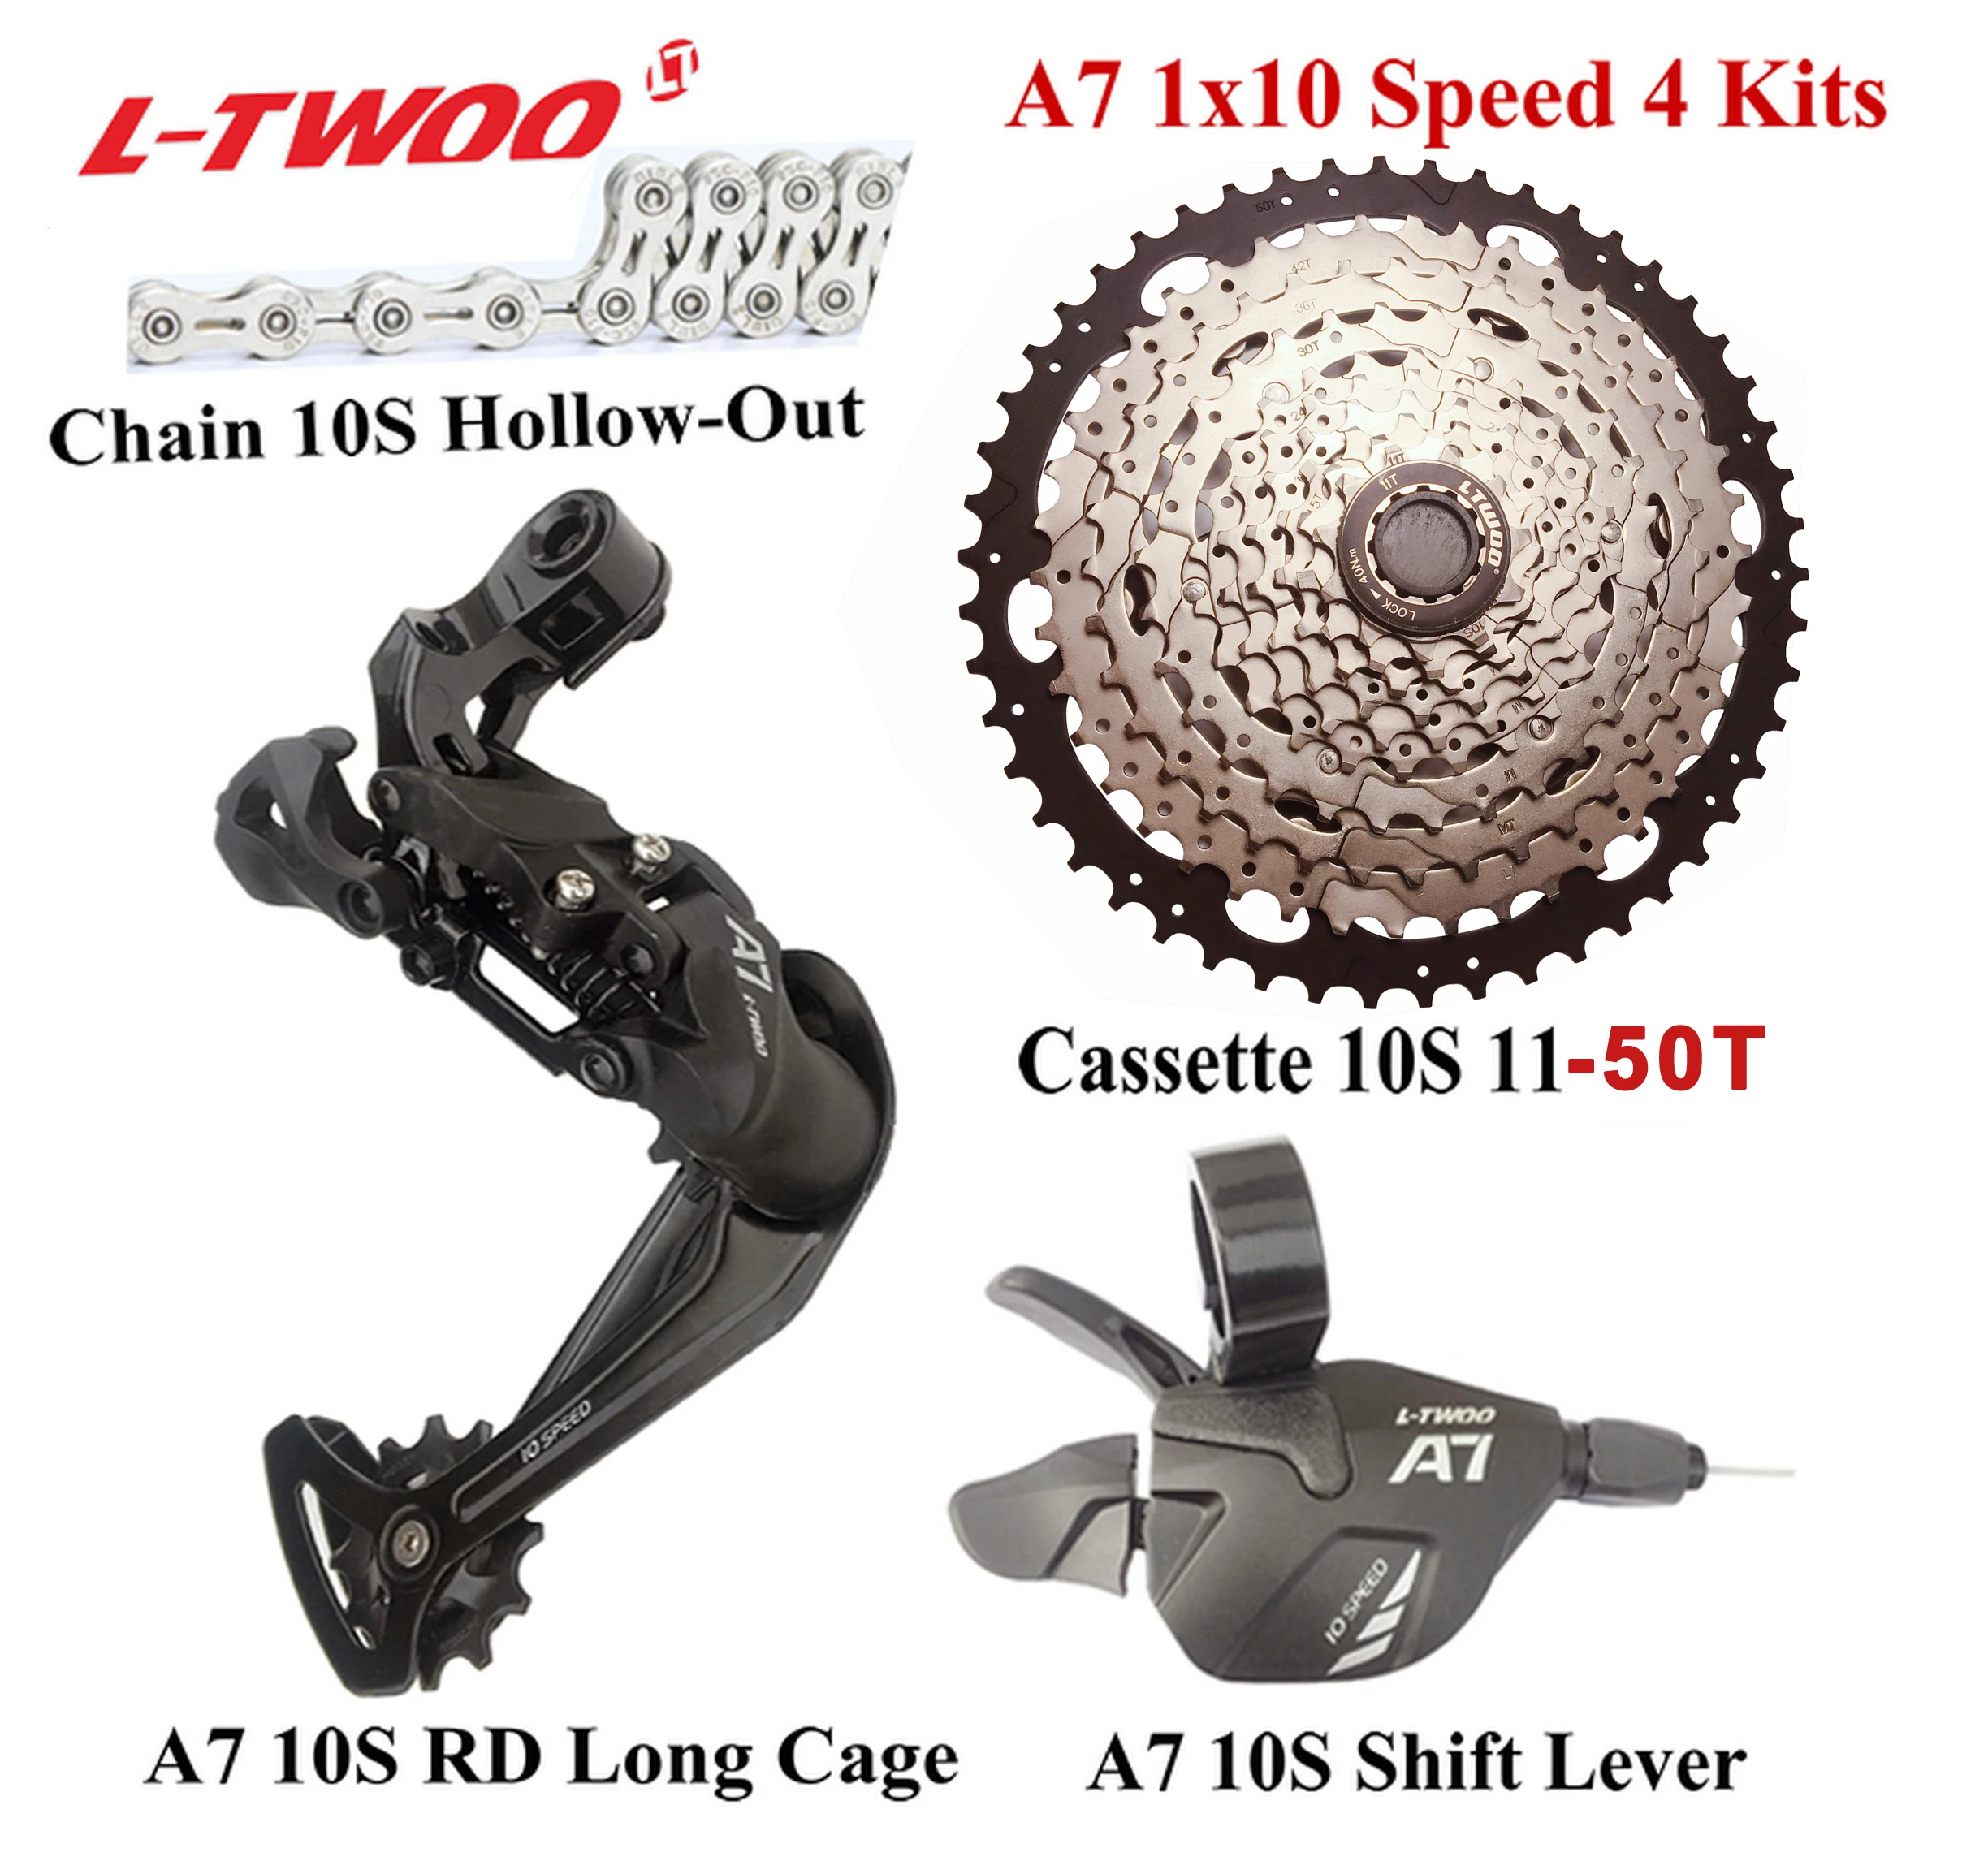 LTWOO велосипед A7 1x10-Speed Groupset рычаг переключения передач+ задний переключатель+ цепь+ кассета 11-42 T, 11-46 T, GX, NX, X7, X9 совместимый